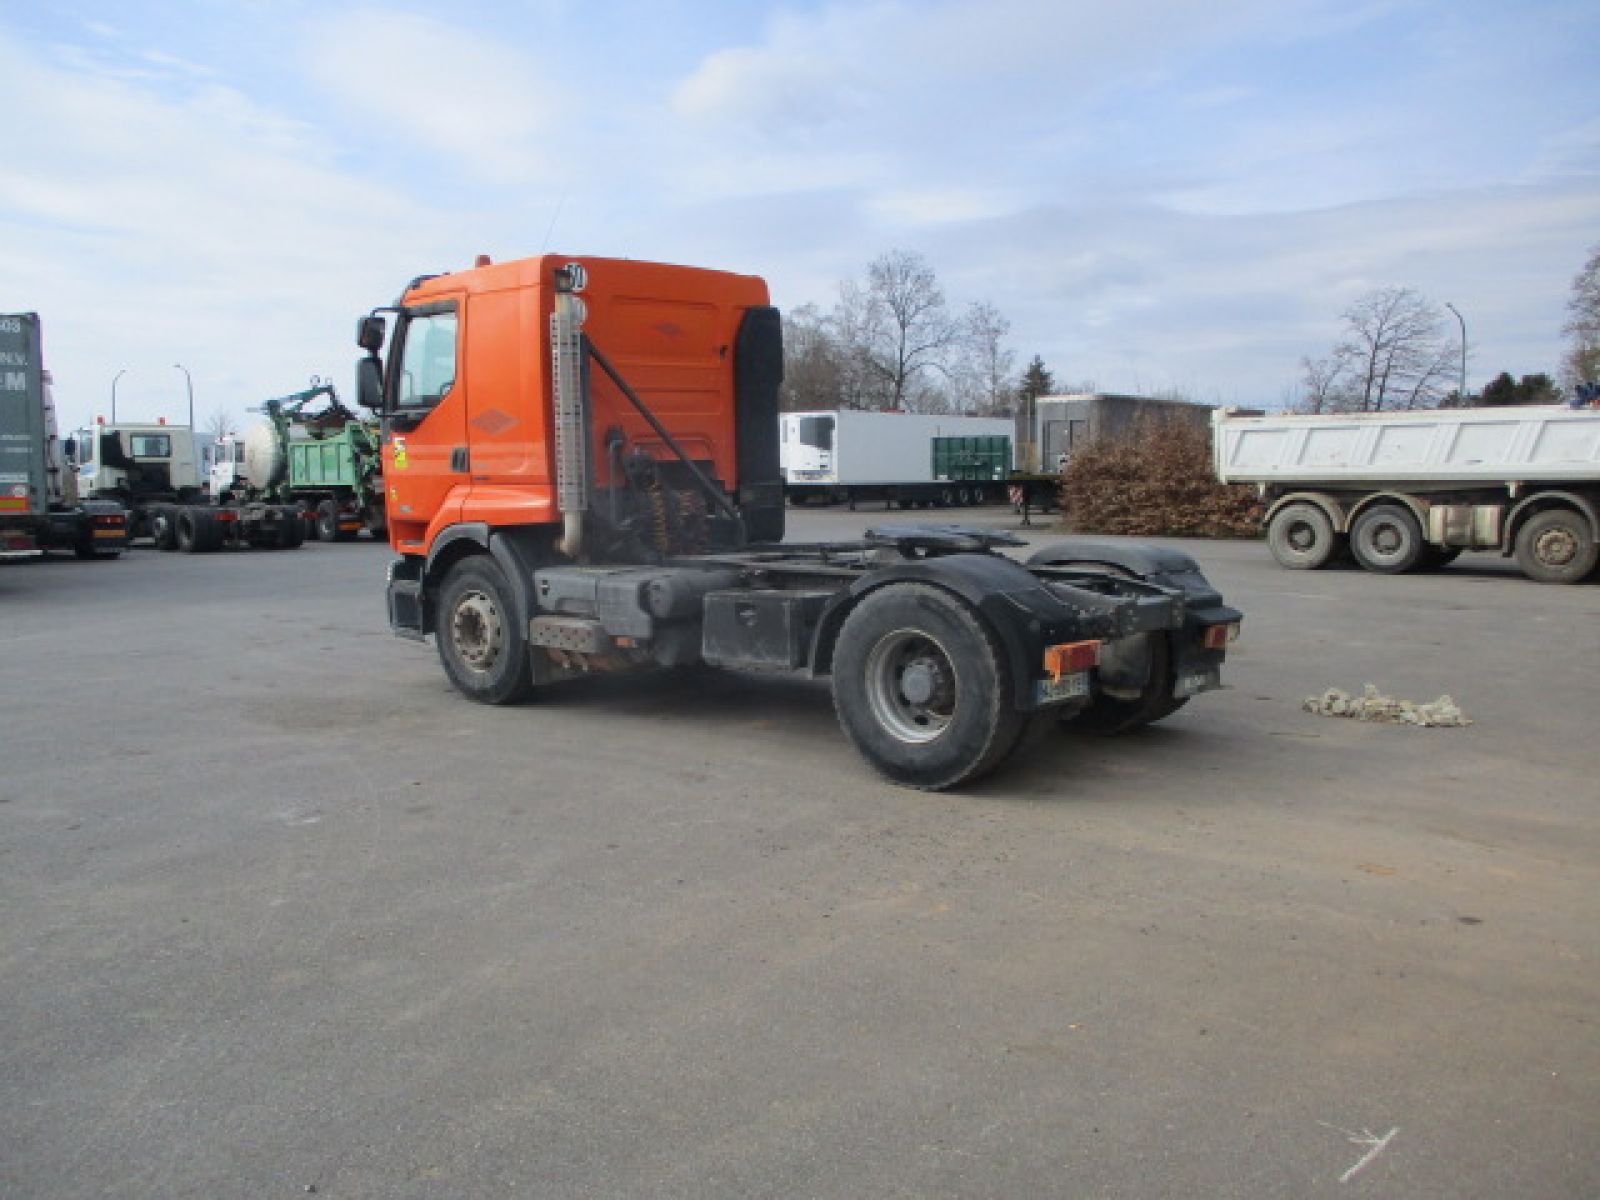 Vente occasion  Tracteur - RENAULT PREMIUM 420DCI  TRACTEUR (Belgique - Europe) - Houffalize Trading s.a.